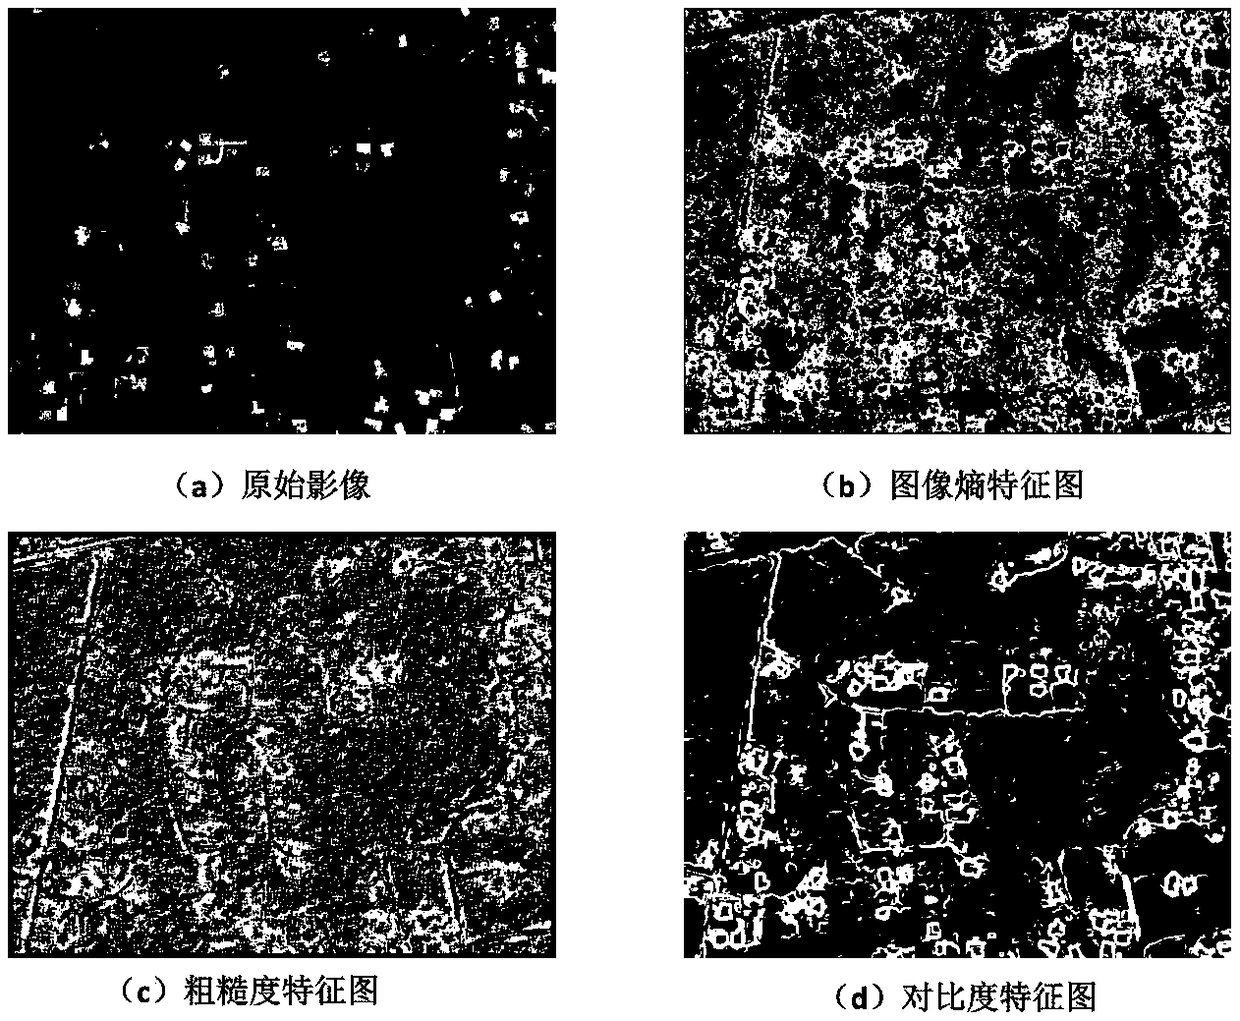 Remote sensing image ground object classification method based on depth learning semantic segmentation network